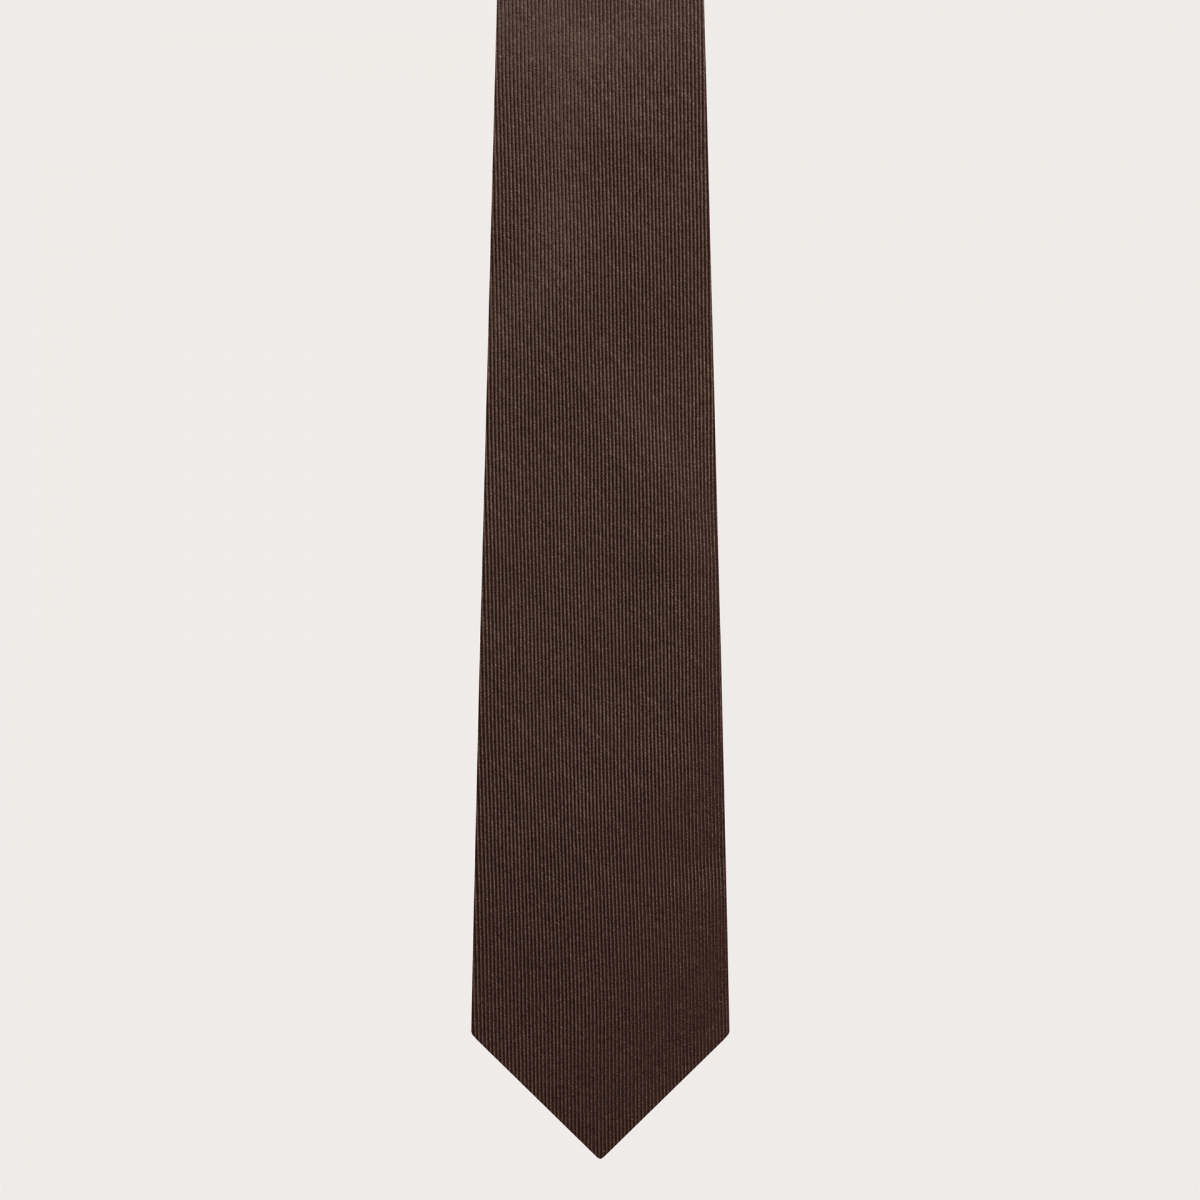 BRUCLE Elegante set di bretelle, cravatta e pochette in seta marrone